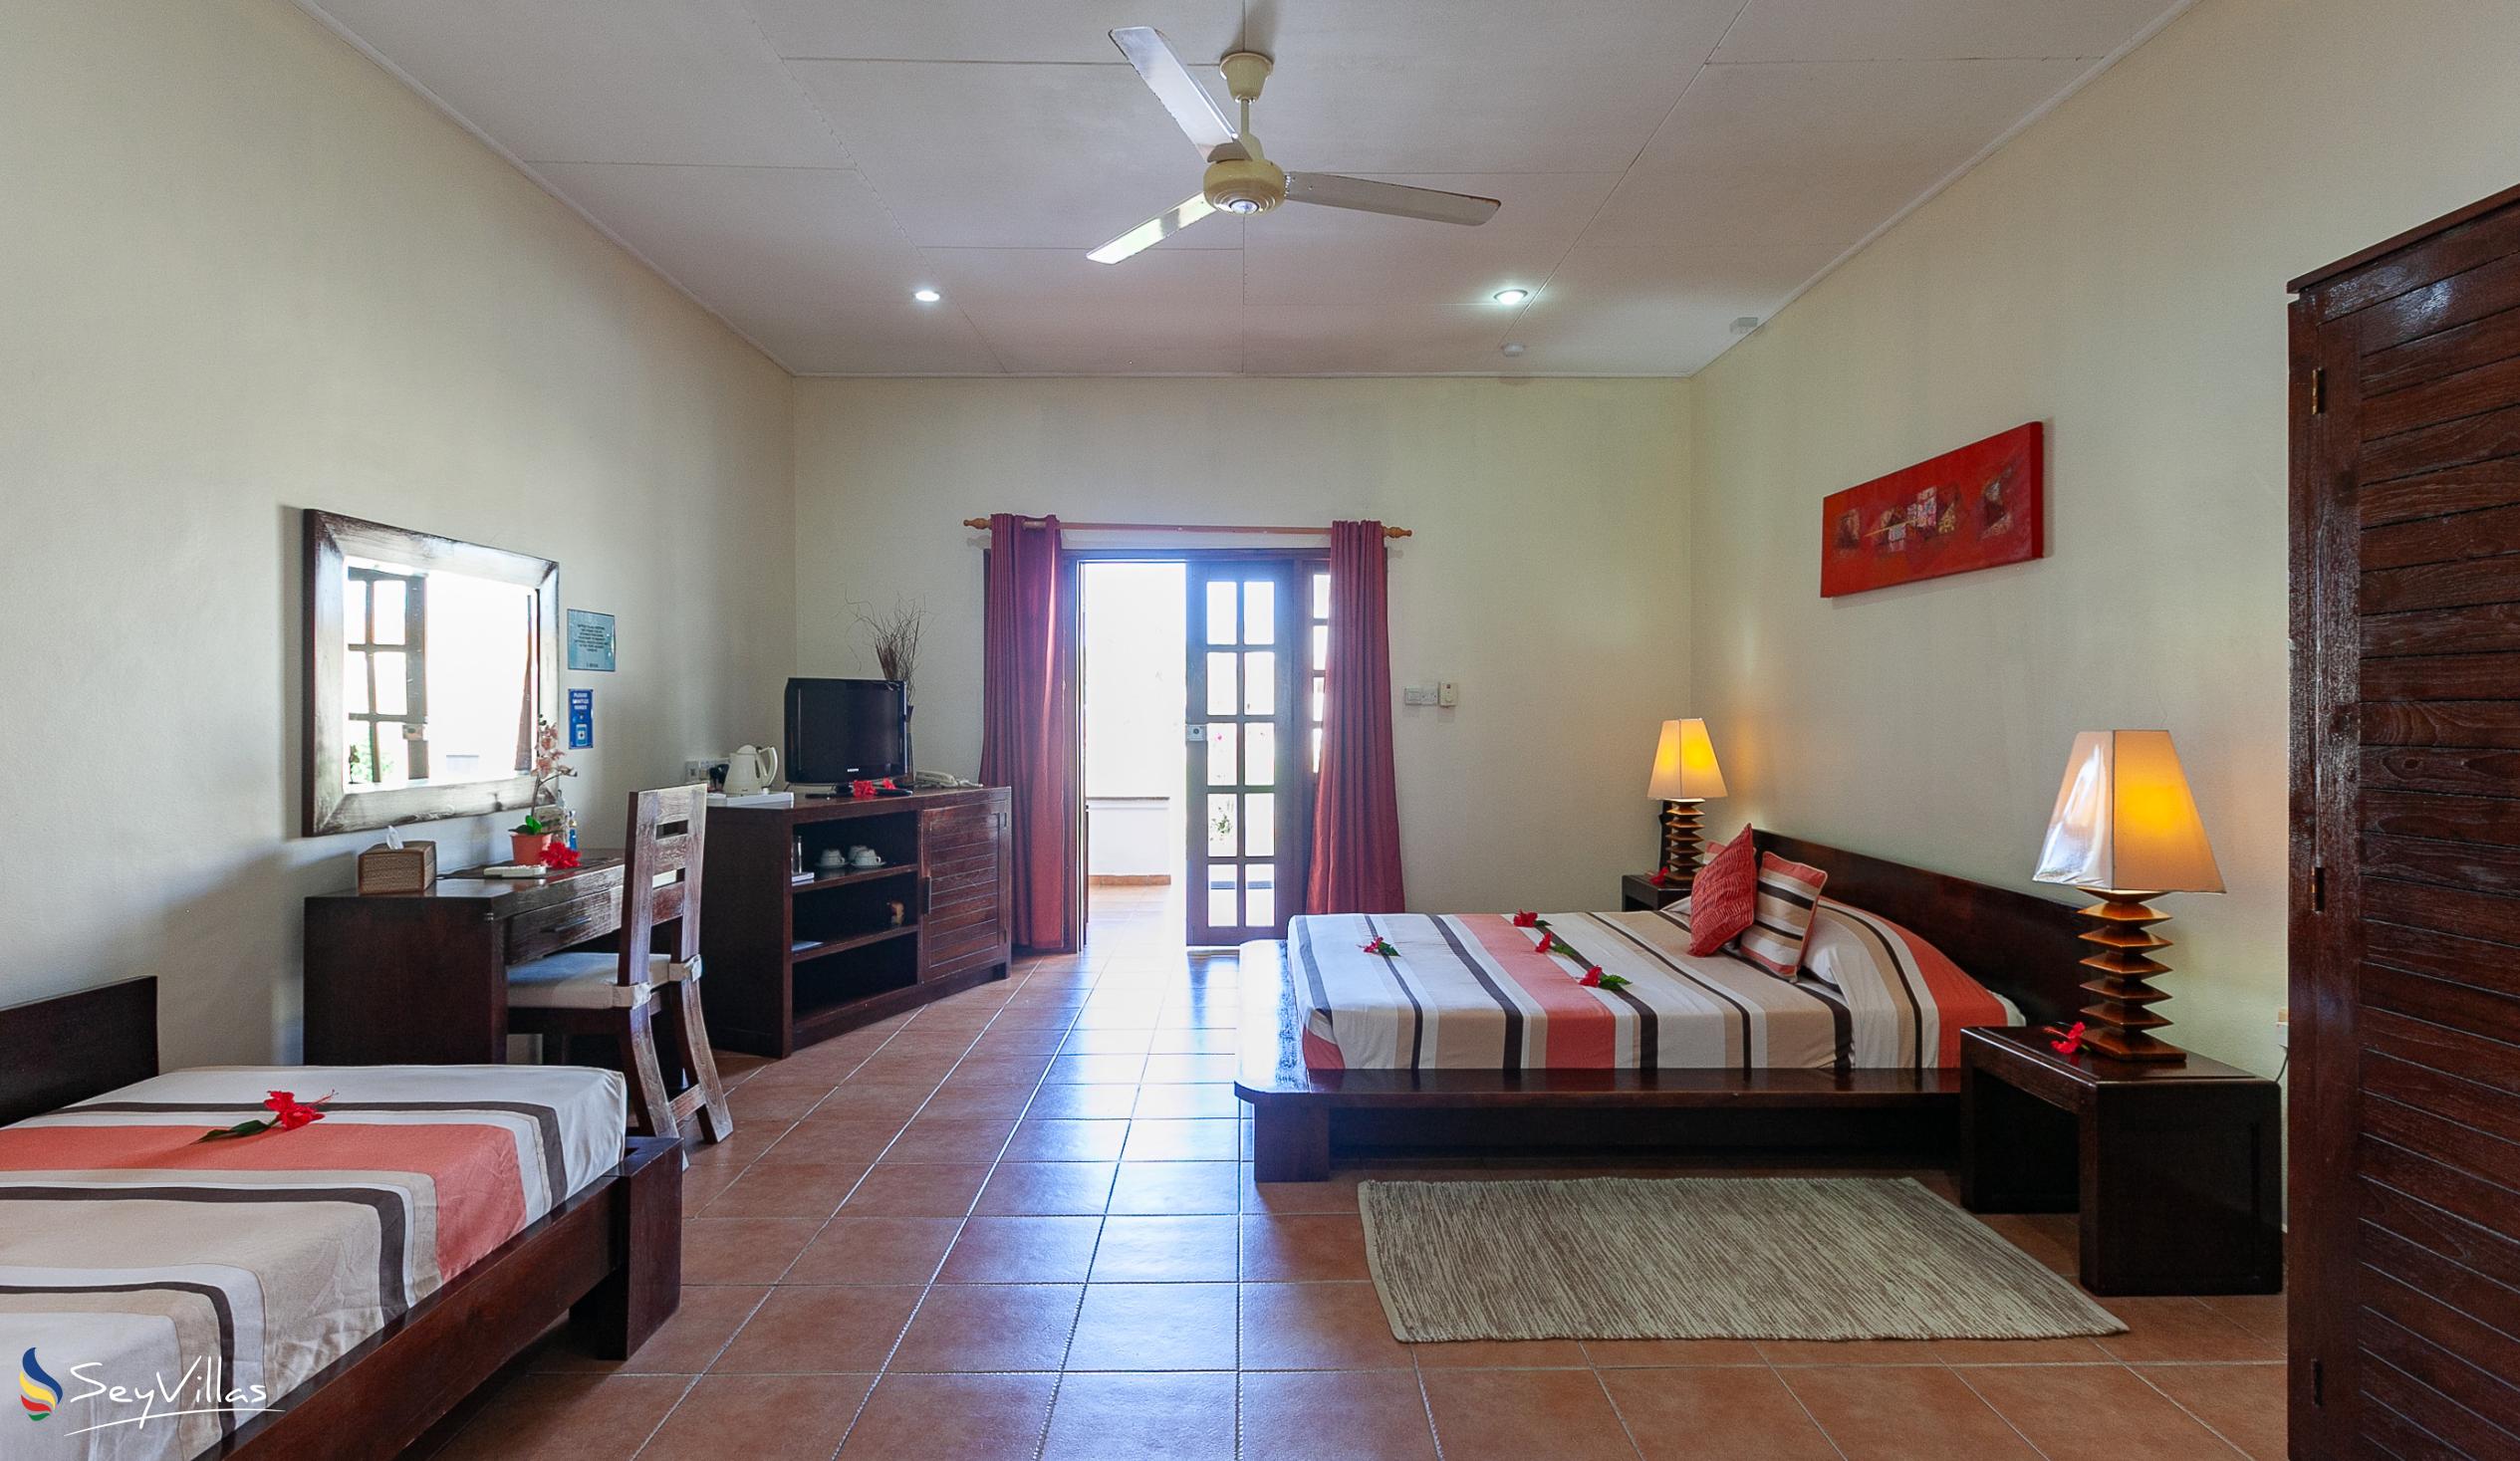 Foto 41: Britannia Hotel - Chambre Familiale Supérieure - Praslin (Seychelles)